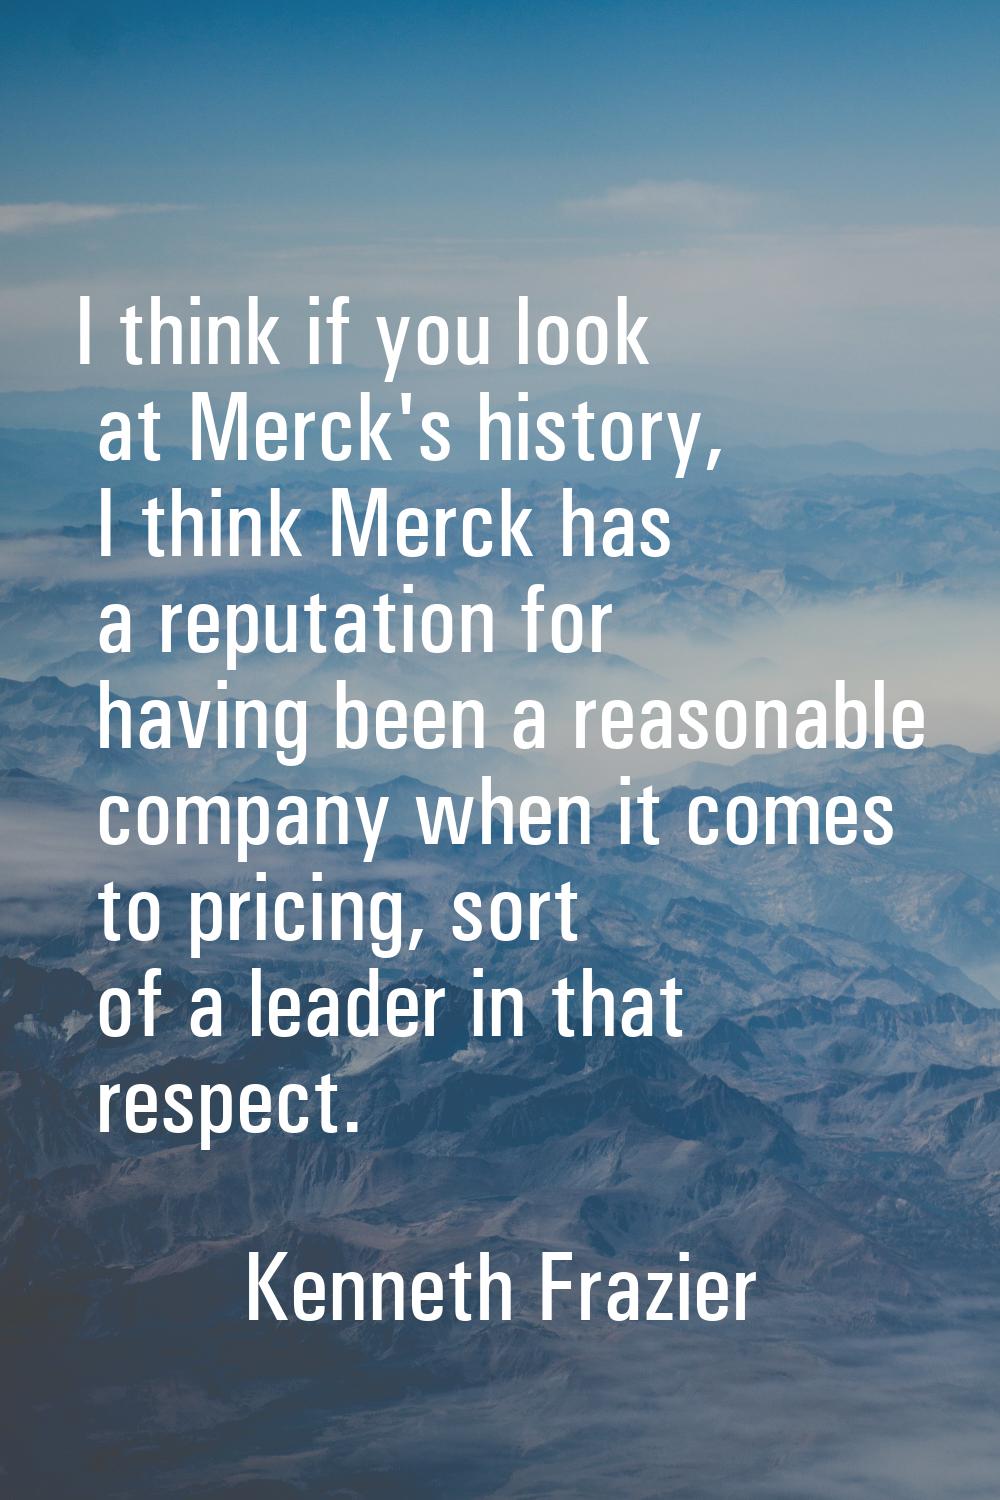 I think if you look at Merck's history, I think Merck has a reputation for having been a reasonable